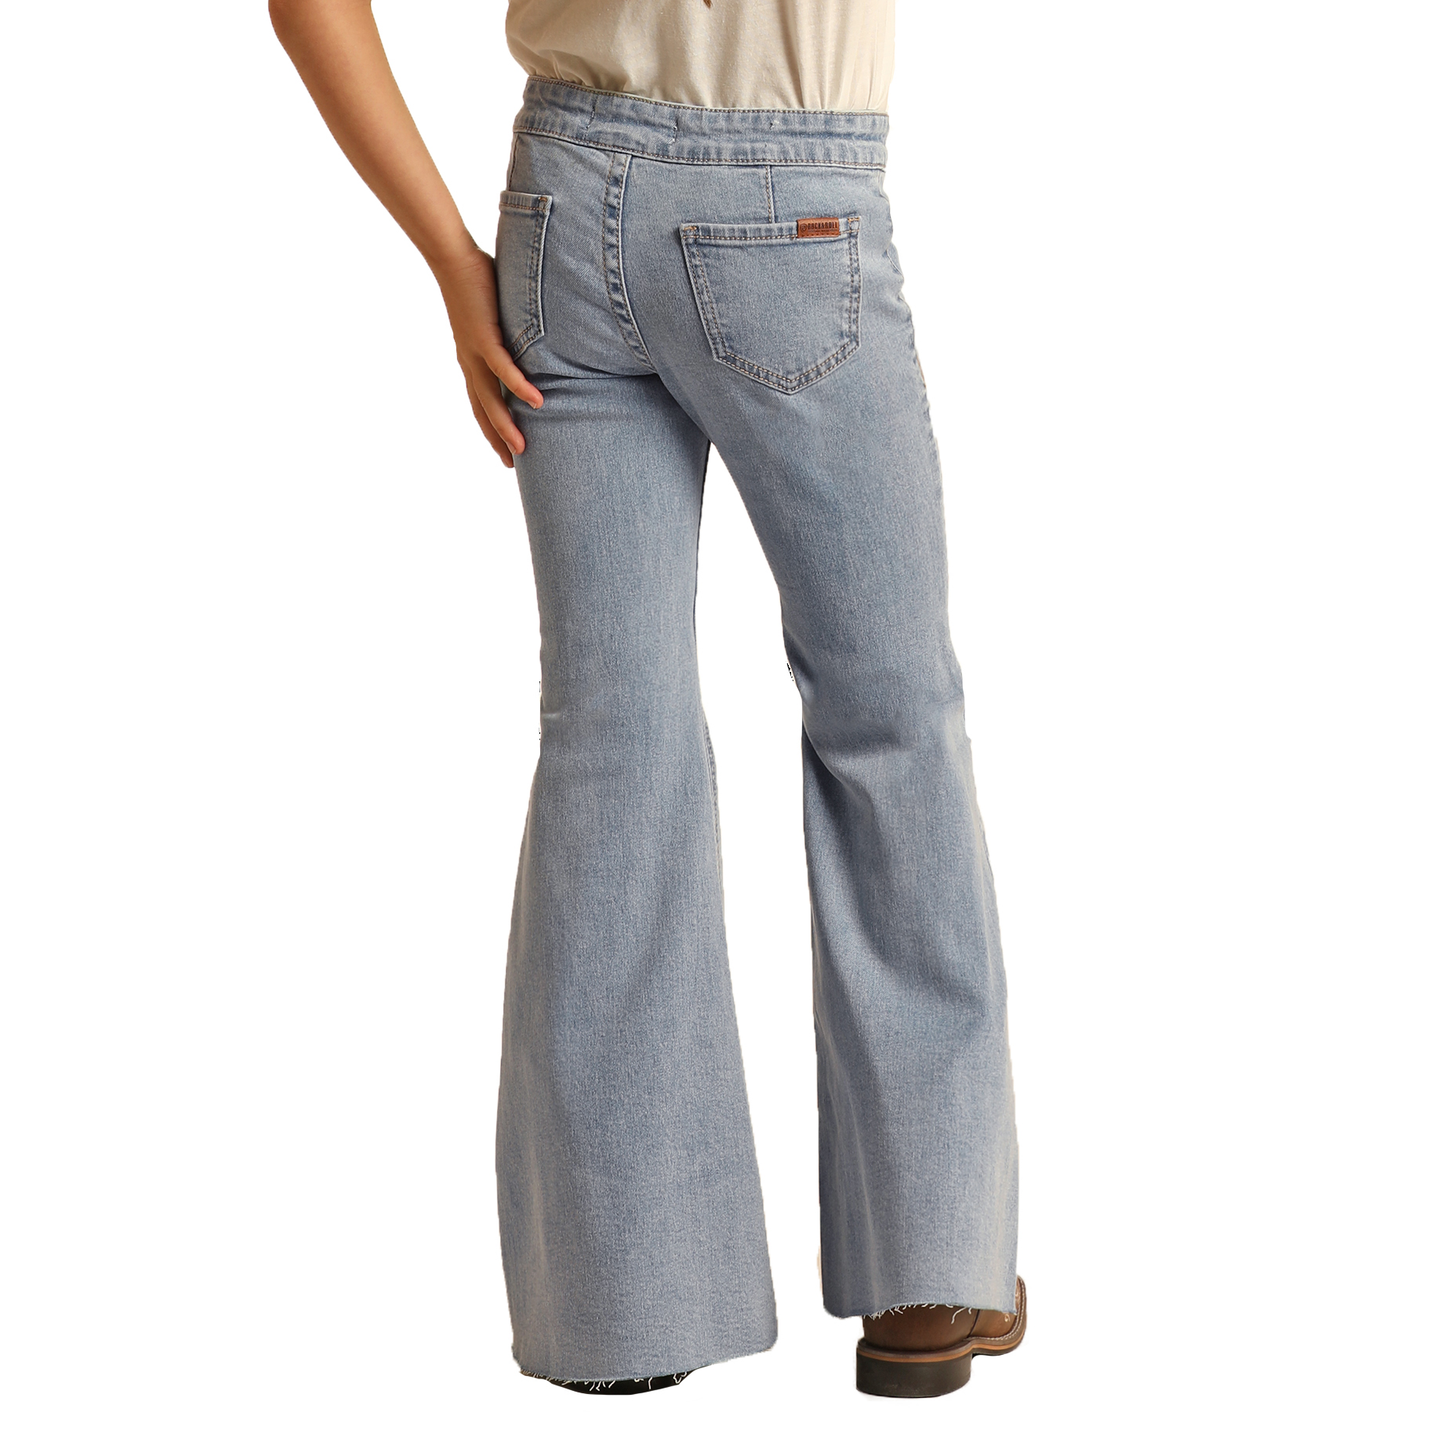 Buy MODNTOGA Little Girl's Vintage Jeans Bell-Bottoms Denim Pants Skinny  Pants 2-6T (Dark Blue, 100 (3-4T)) at Amazon.in